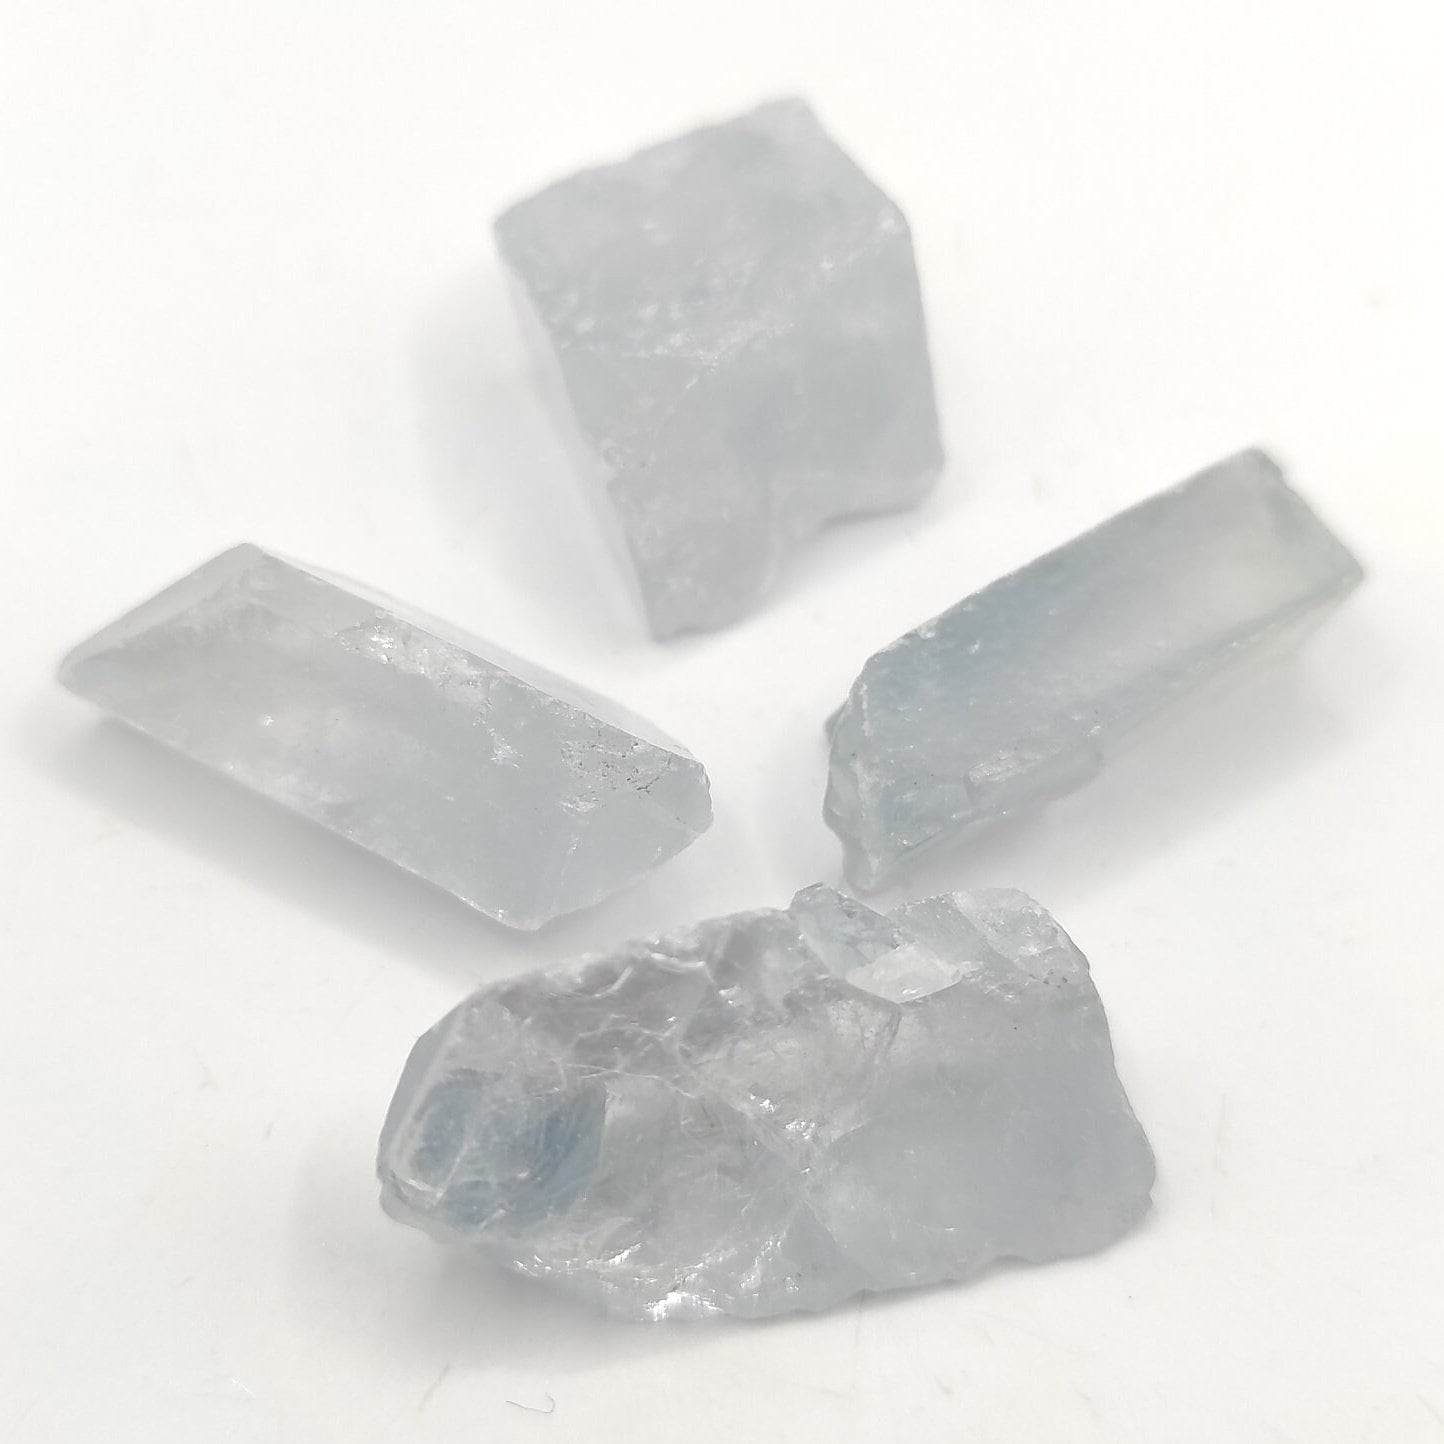 26g (4pc) Lot of Light Blue Celestite - Maybee, Michigan - Natural Celestite Crystals - Raw Celestite Gems - Rough Celestite for Jewelery